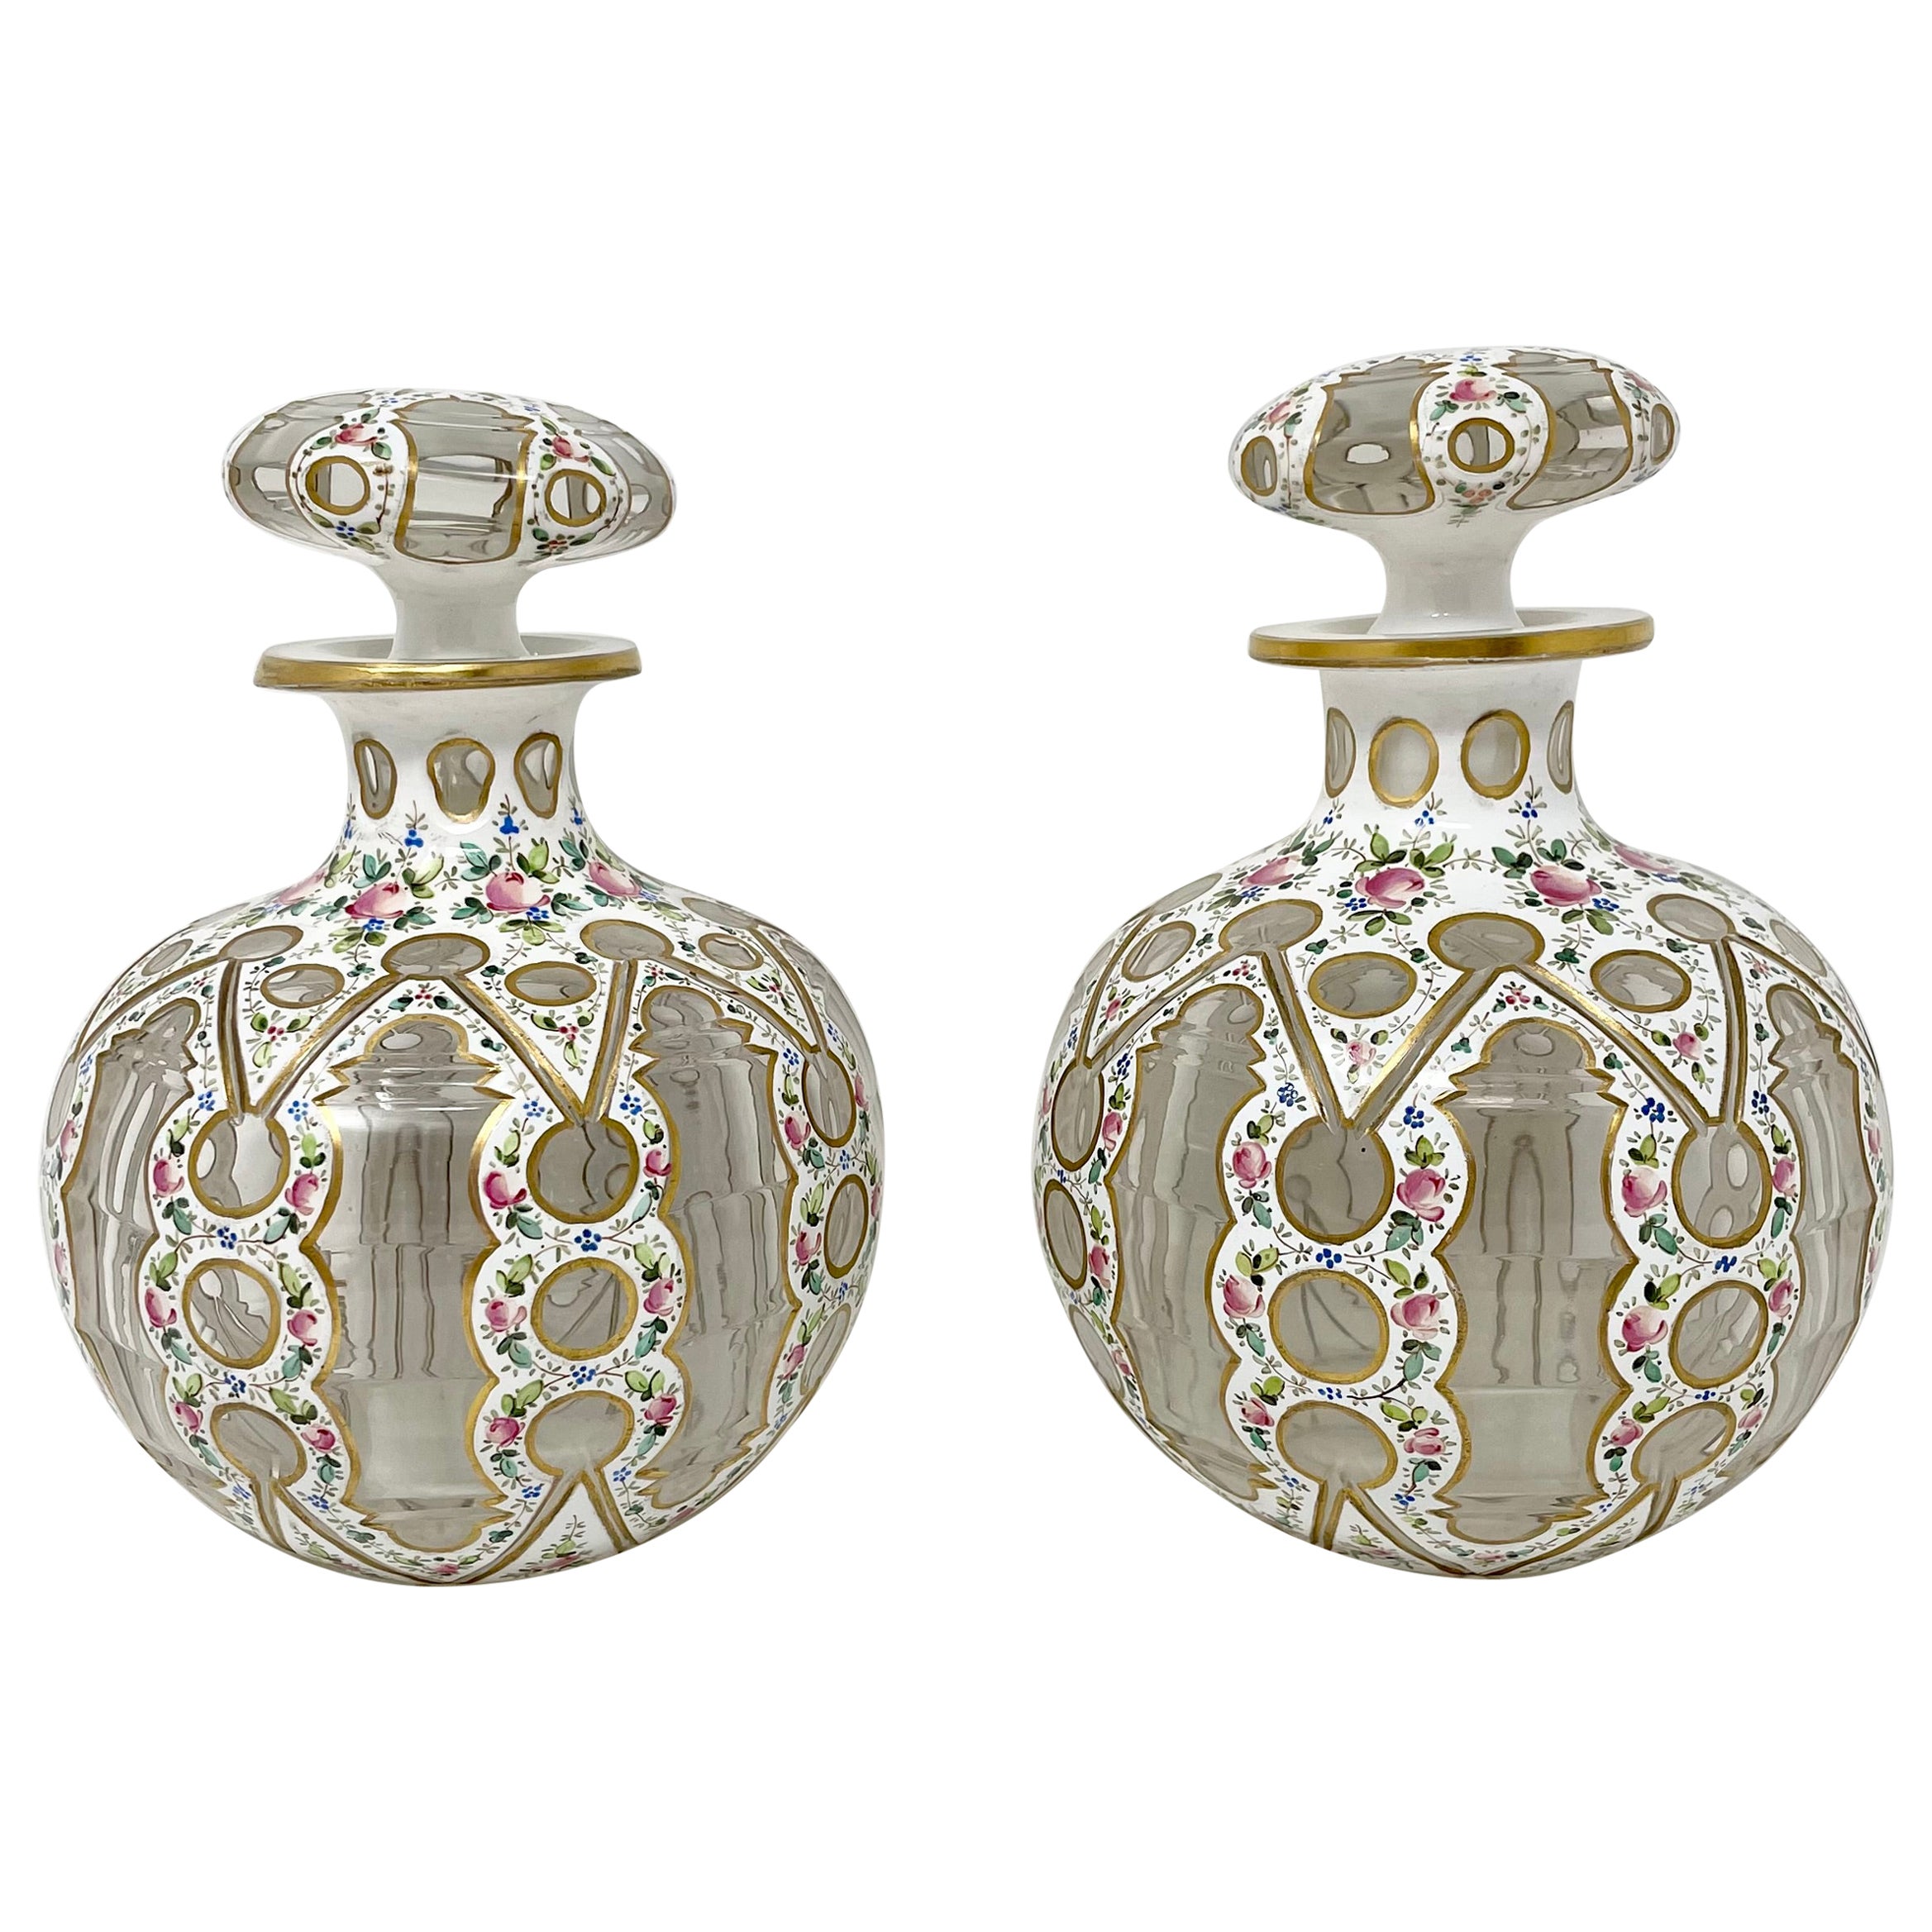 Pair Antique French Enameled Porcelain & Glass Perfume Bottles, Circa 1860-1870.